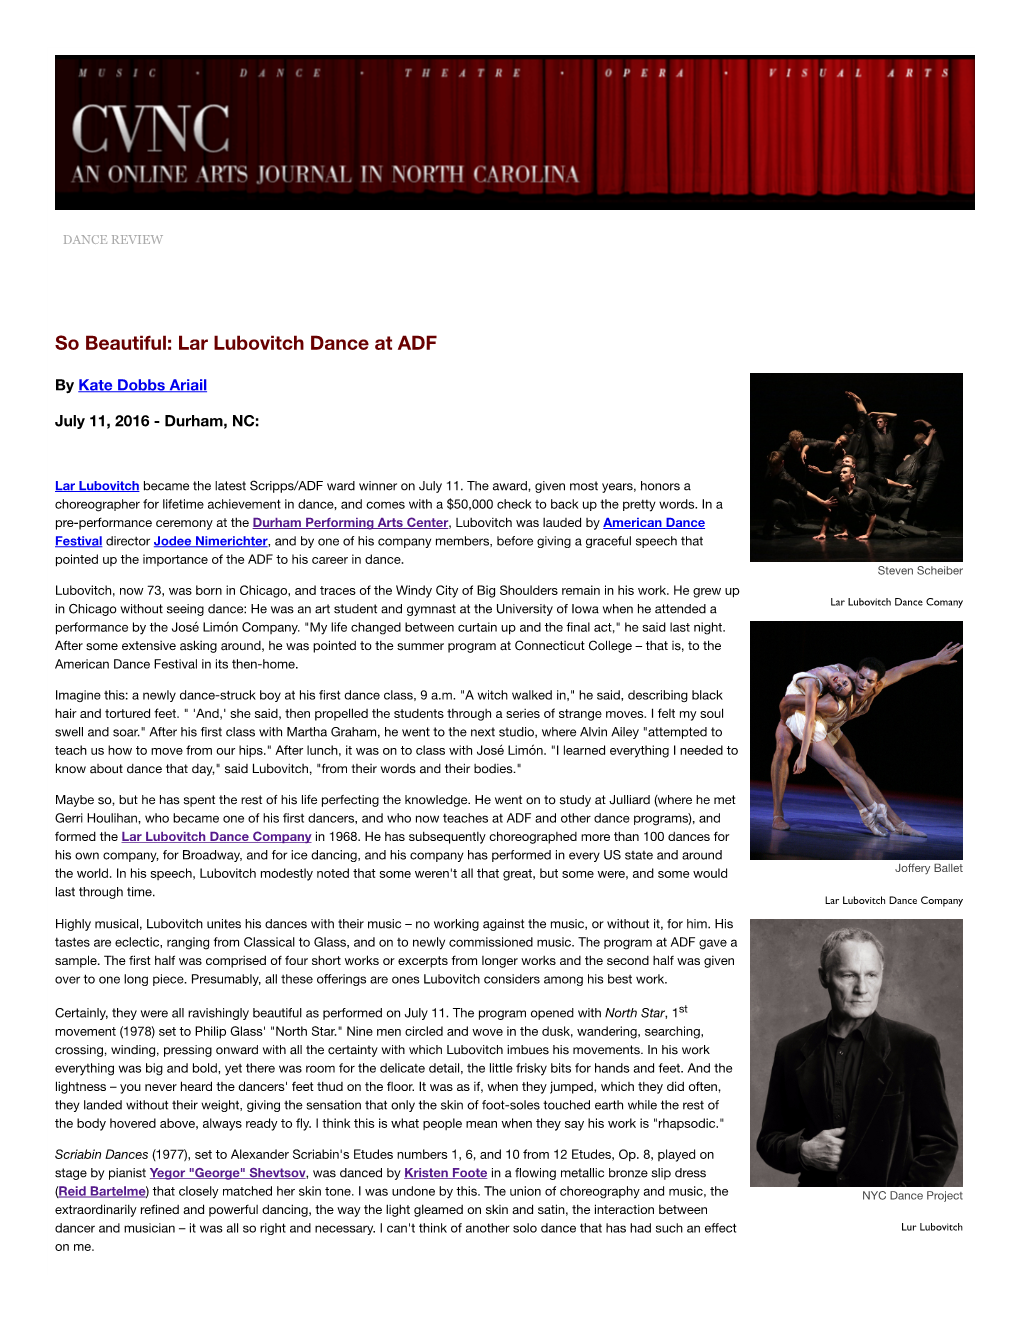 "So Beautiful: Lar Lubovitch Dance at ADF"